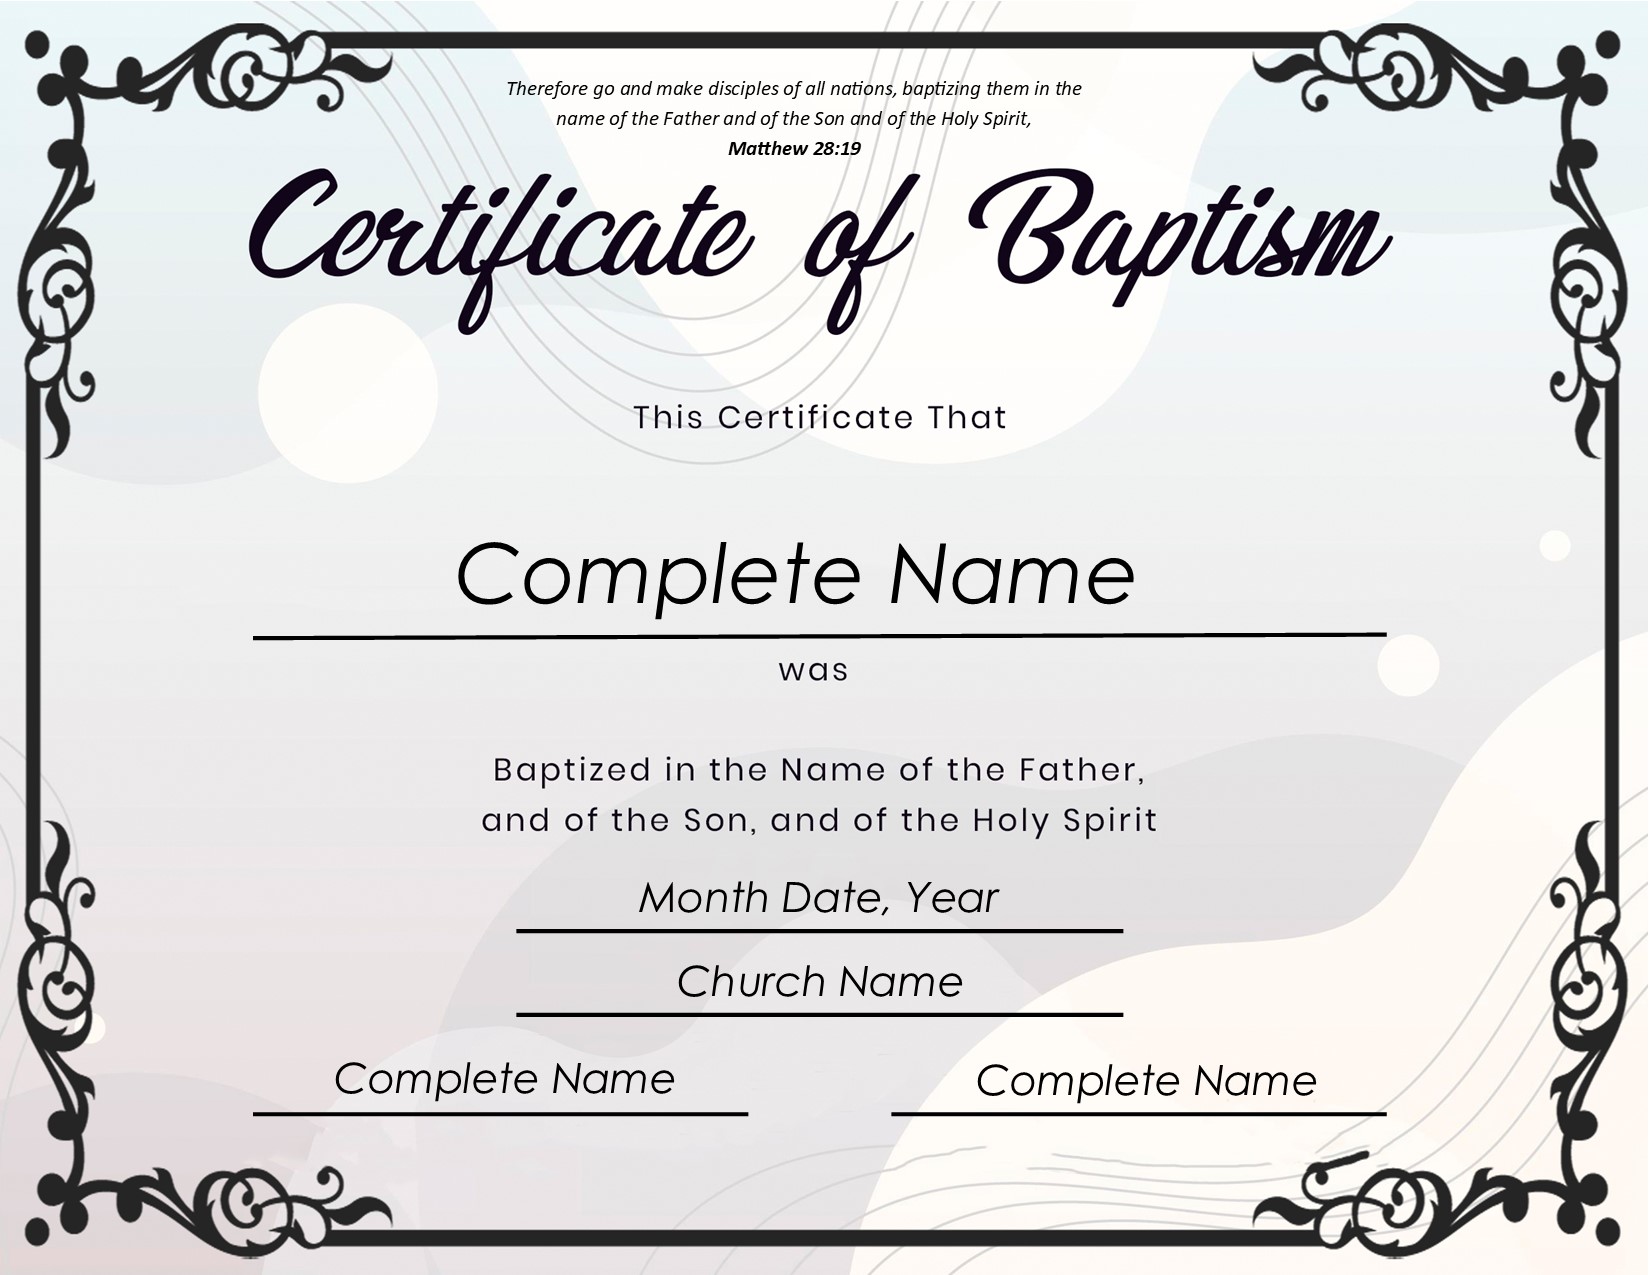 baptismal-certificate-free-baptism-certificate-templates